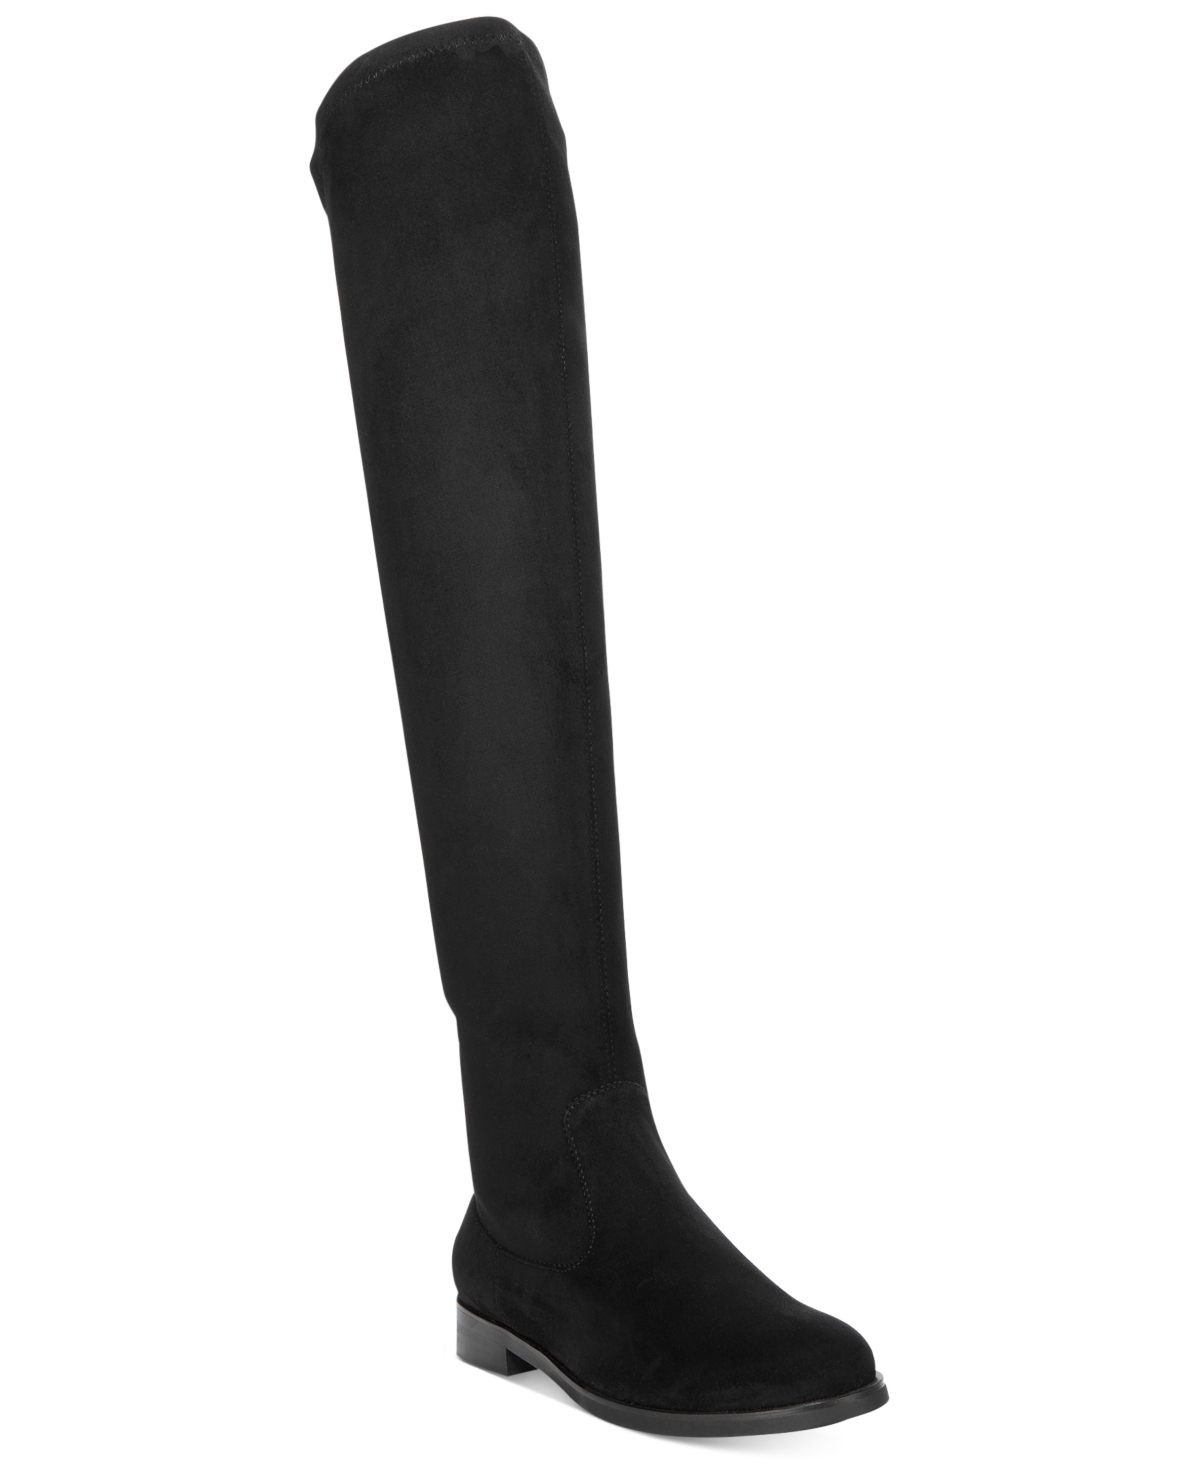 Women's Wind-y Over-The-Knee Boots - Black